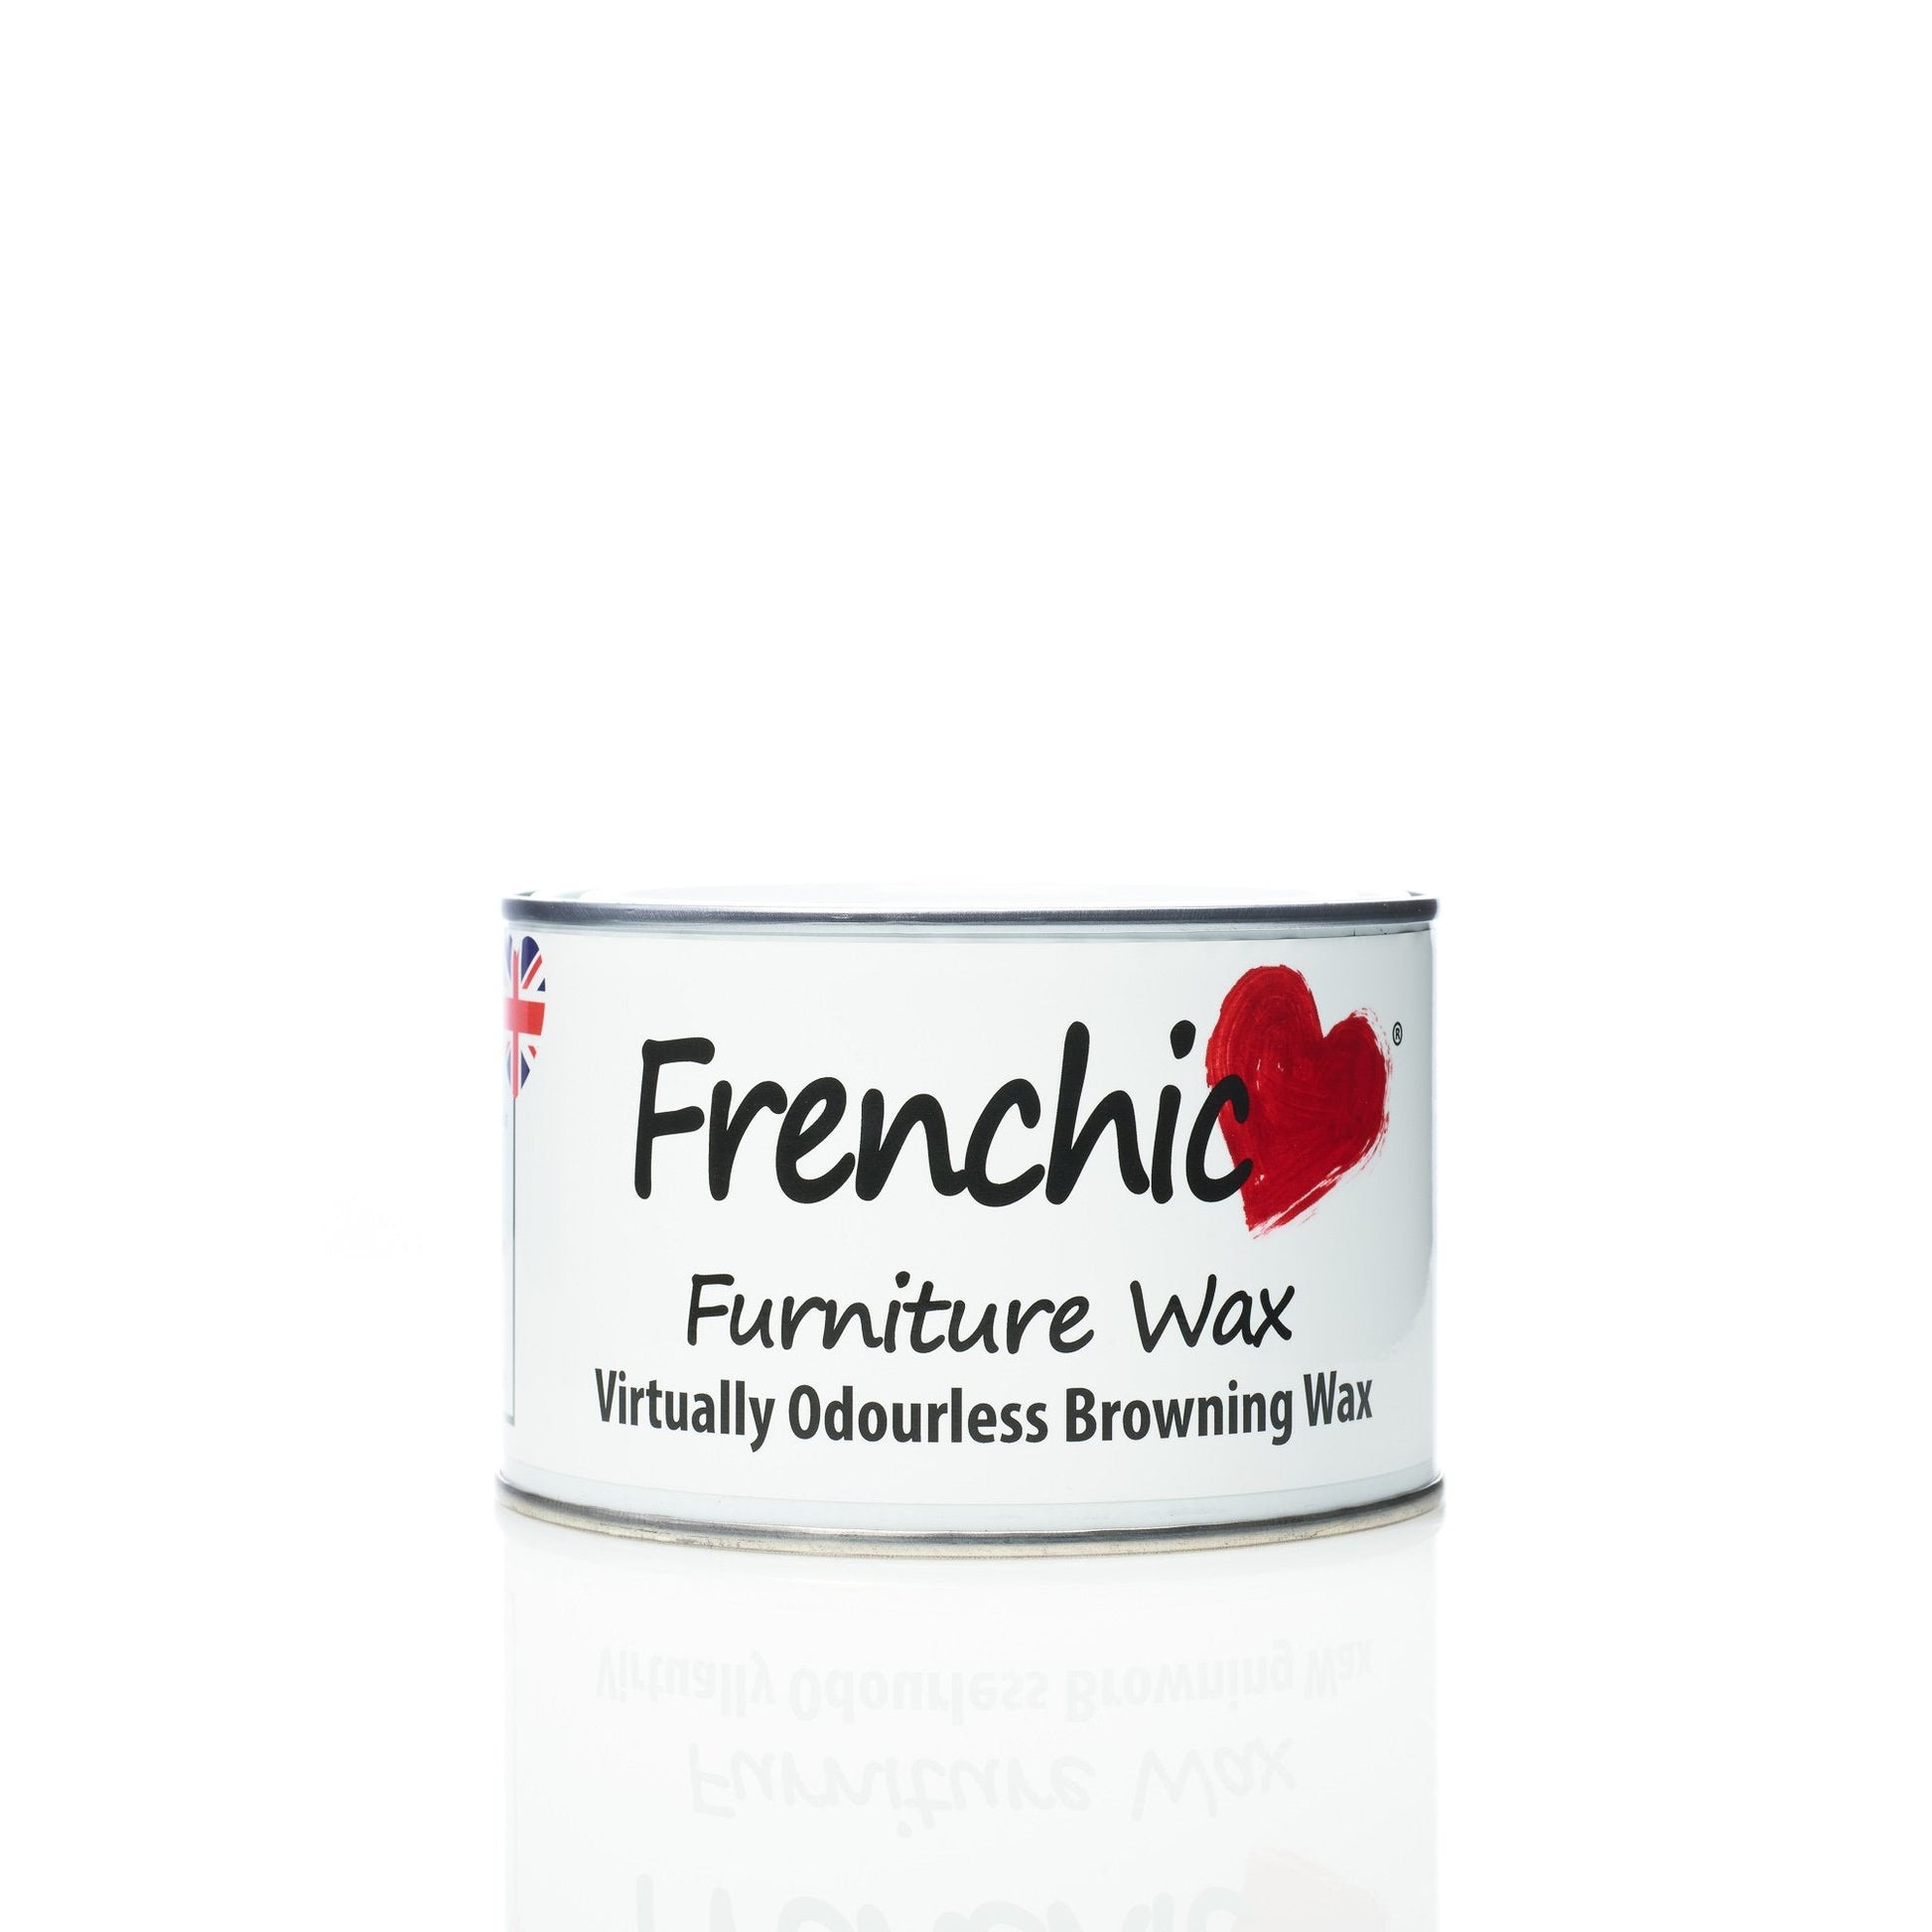 Frenchic Browning Wax, Odourless Wax, White tin, Furniture wax